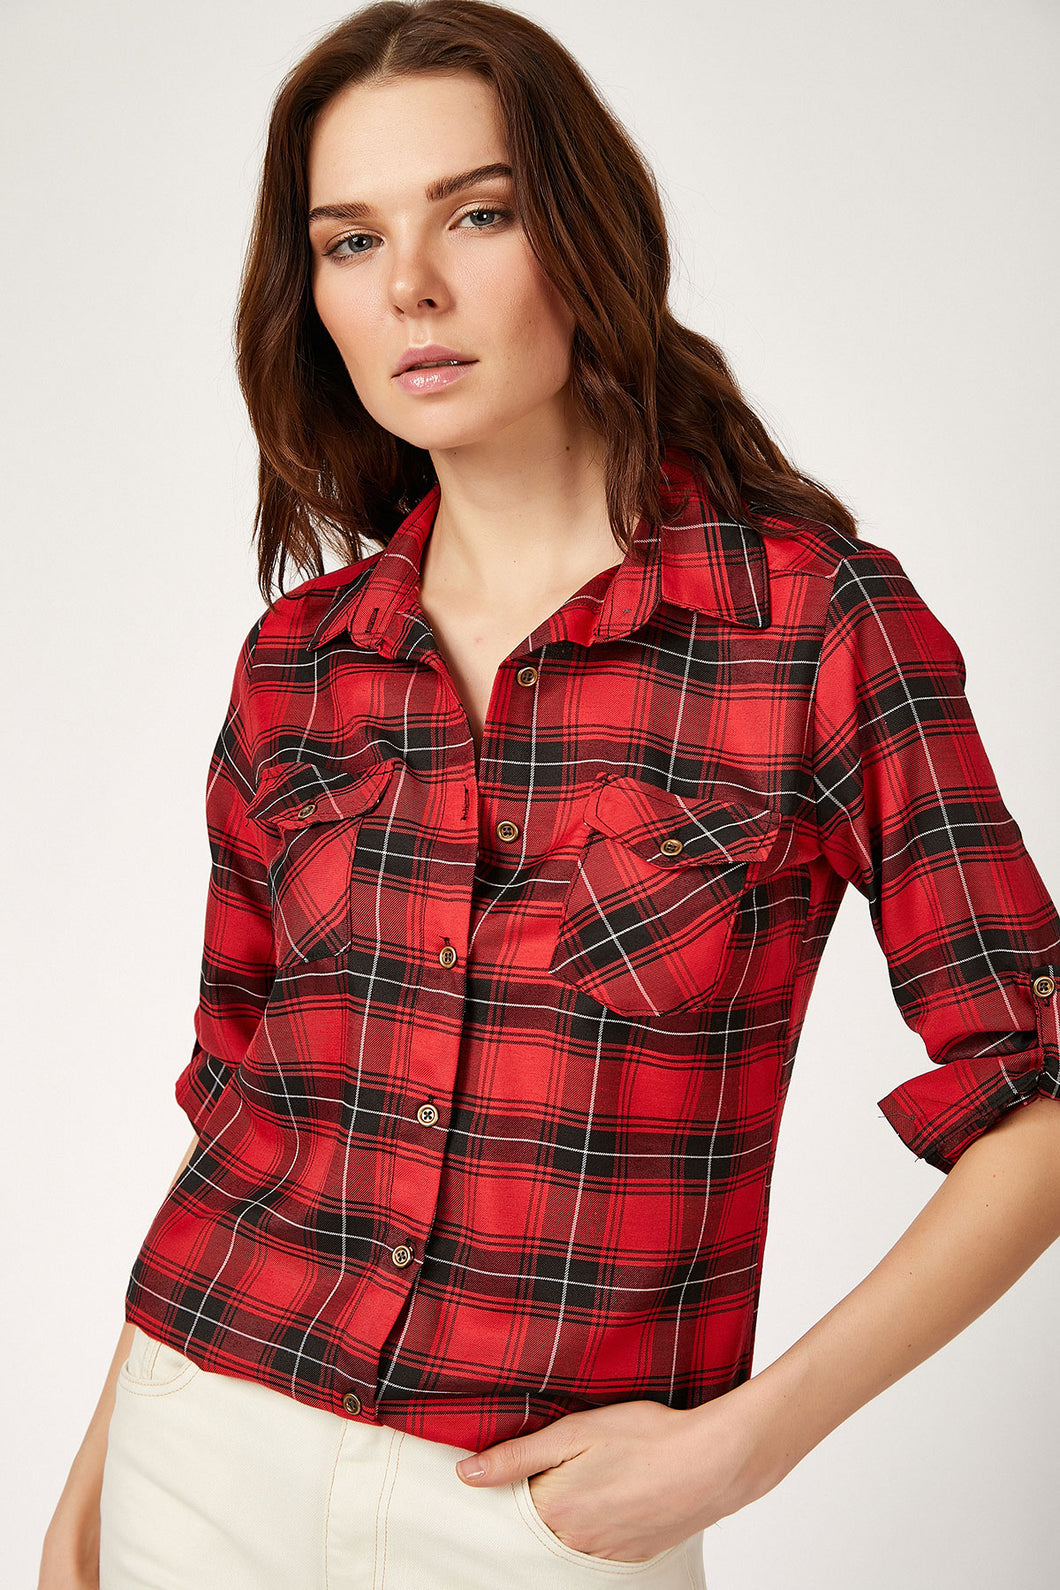 Women's Pocket Checkered Shirt